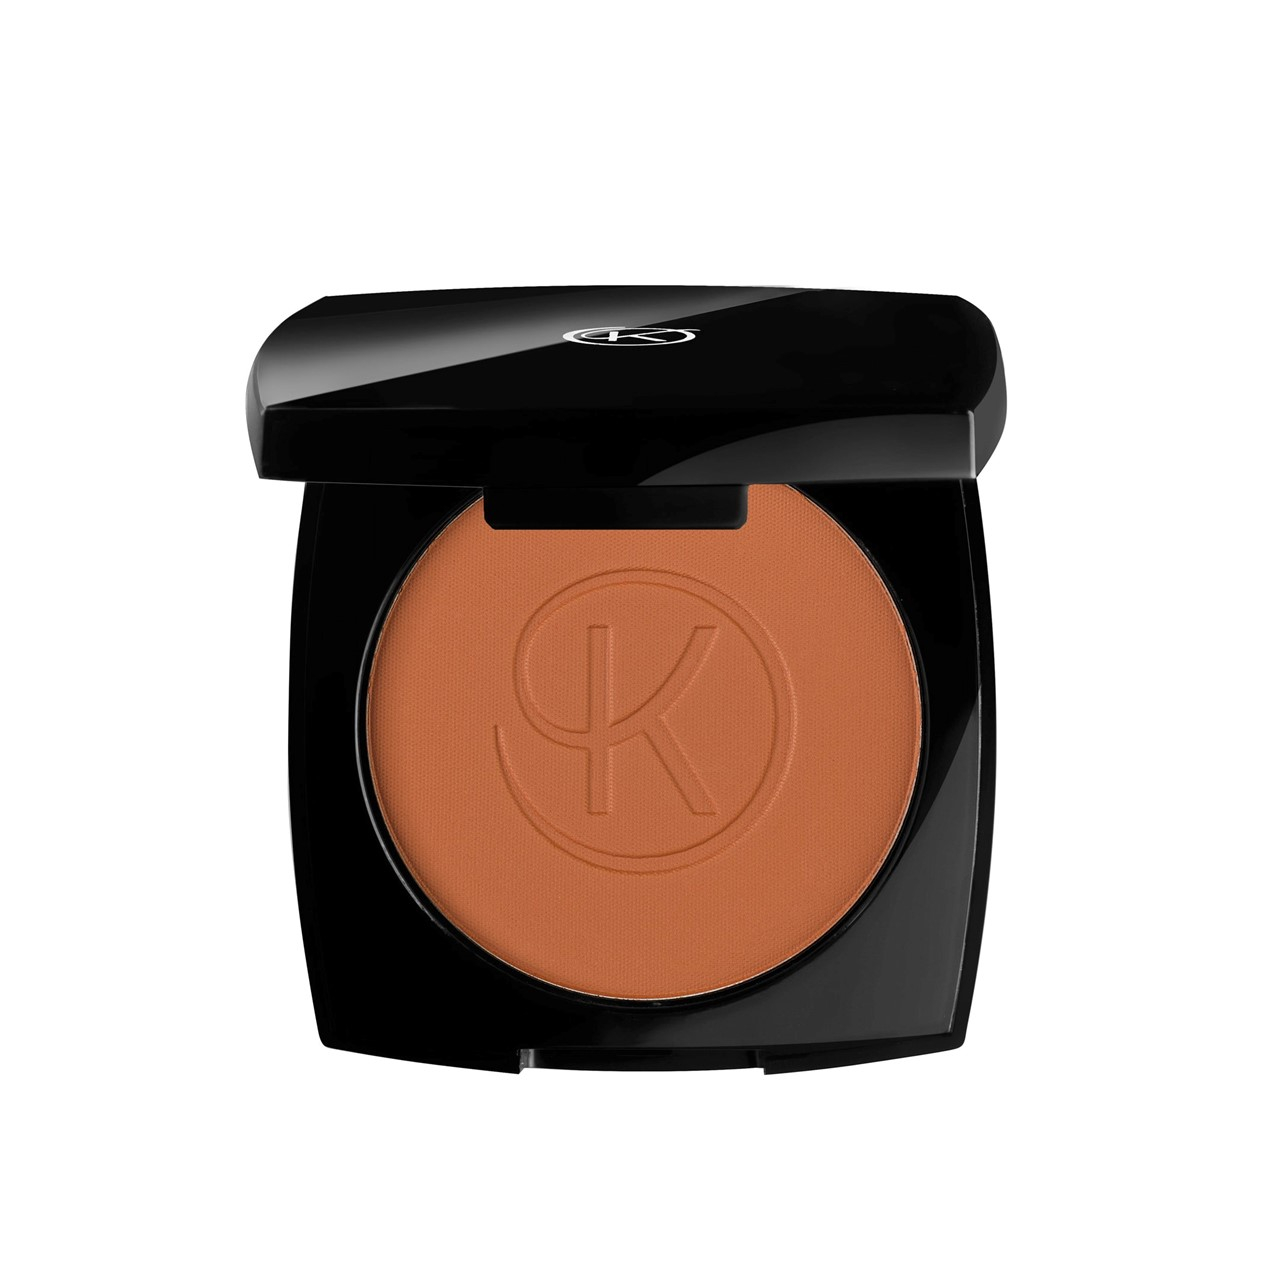 Korff Cure Make-Up Illuminating Compact Bronzing Powder 02 9g (0.32 oz)